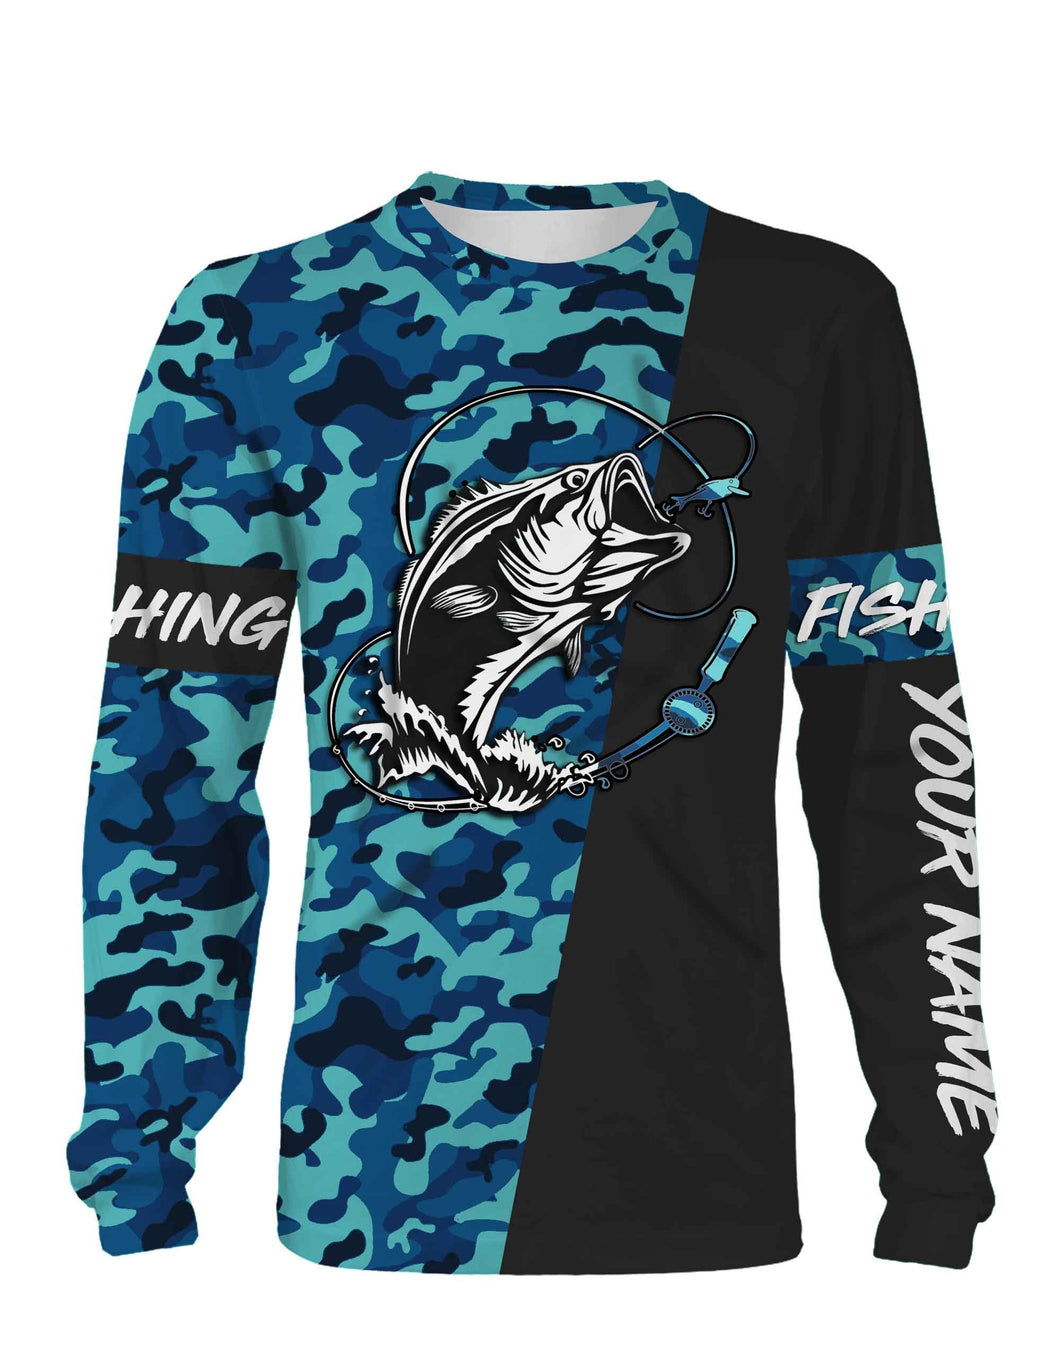 Bass Fishing Sea Camo Custom Name Full Printing Shirts Personalized Gift TATS115